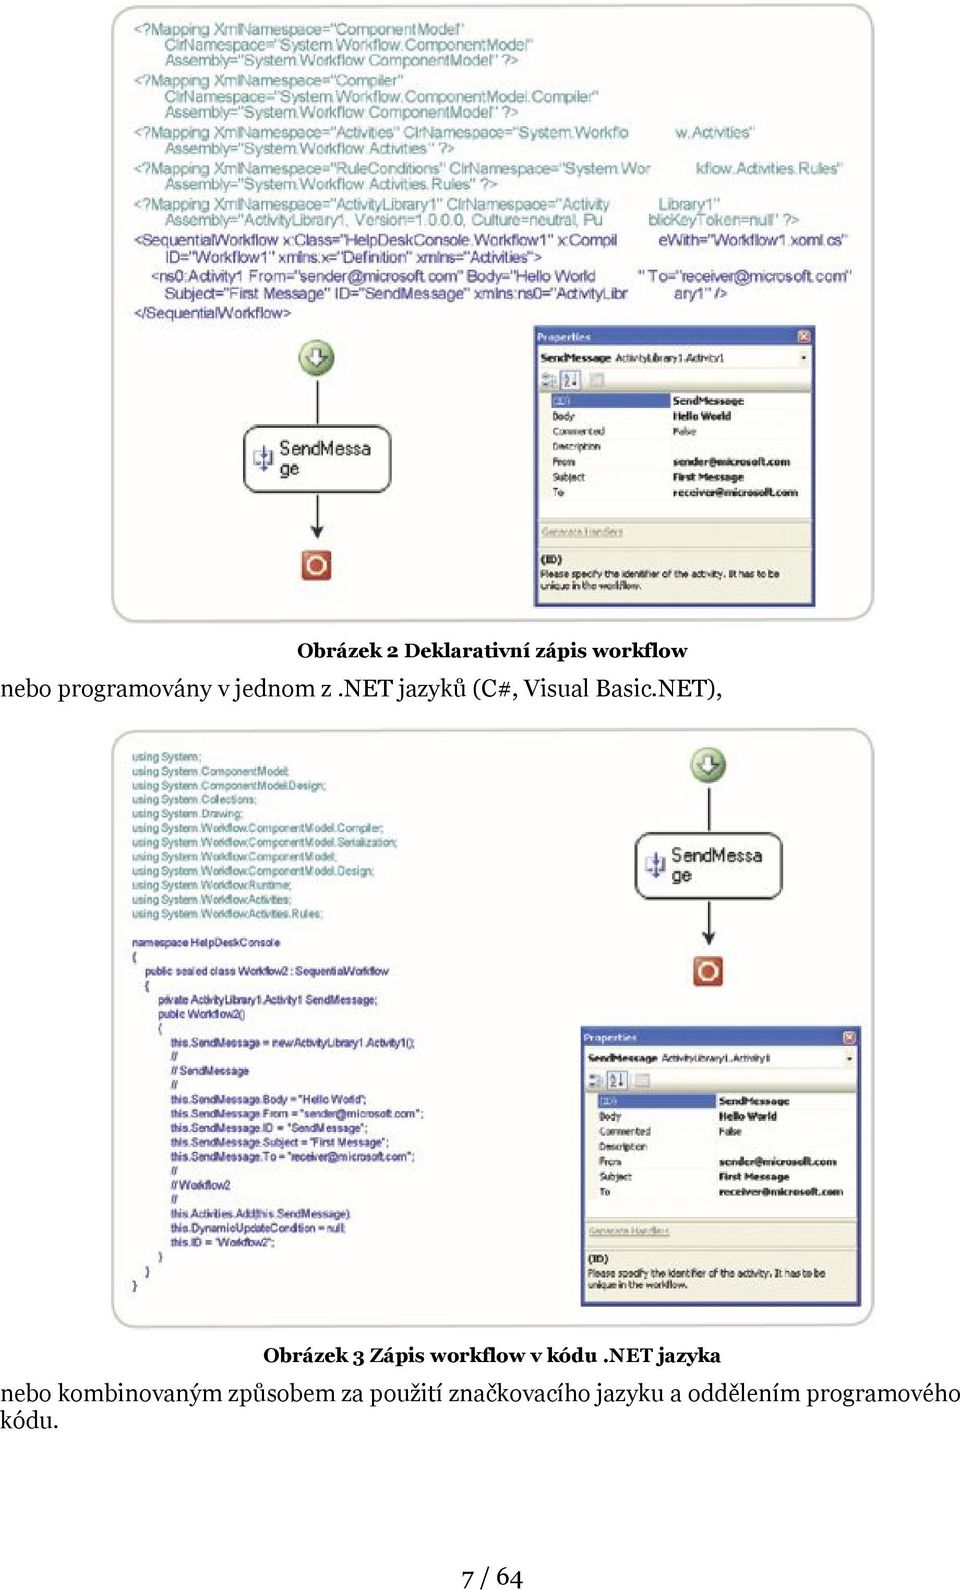 NET), Obrázek 3 Zápis workflow v kódu.